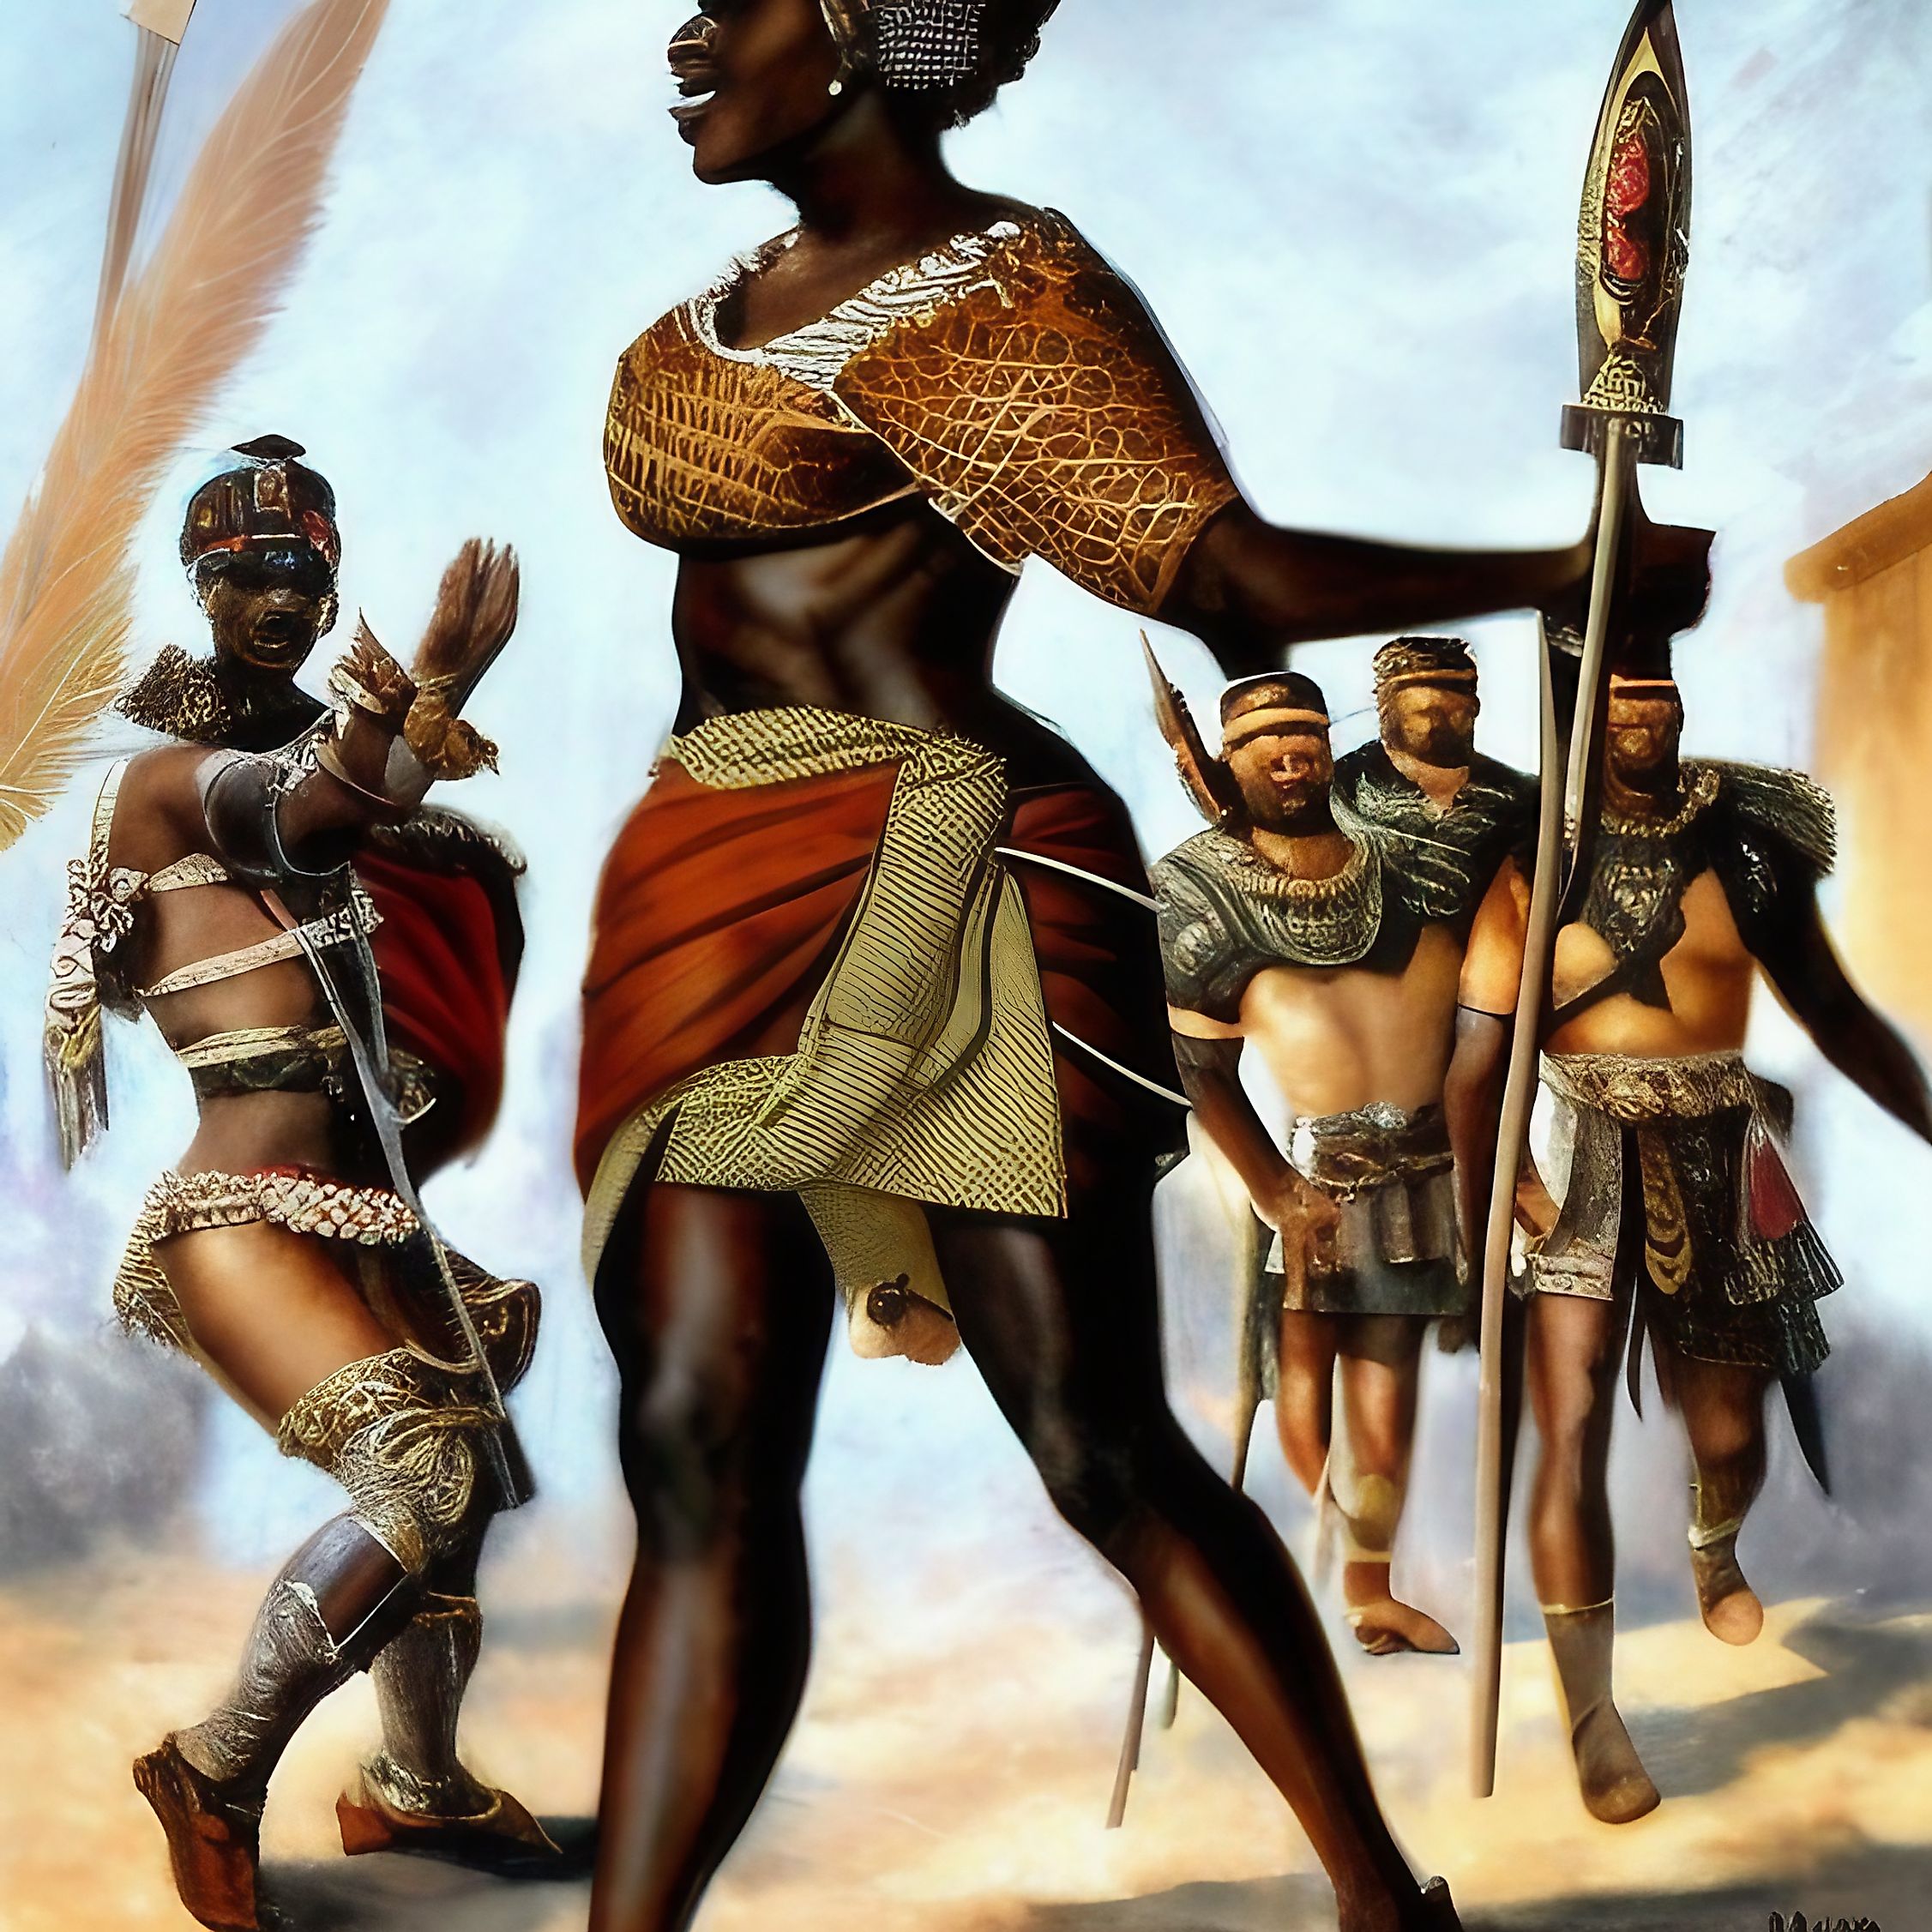 A depiction of Queen Amanirenas